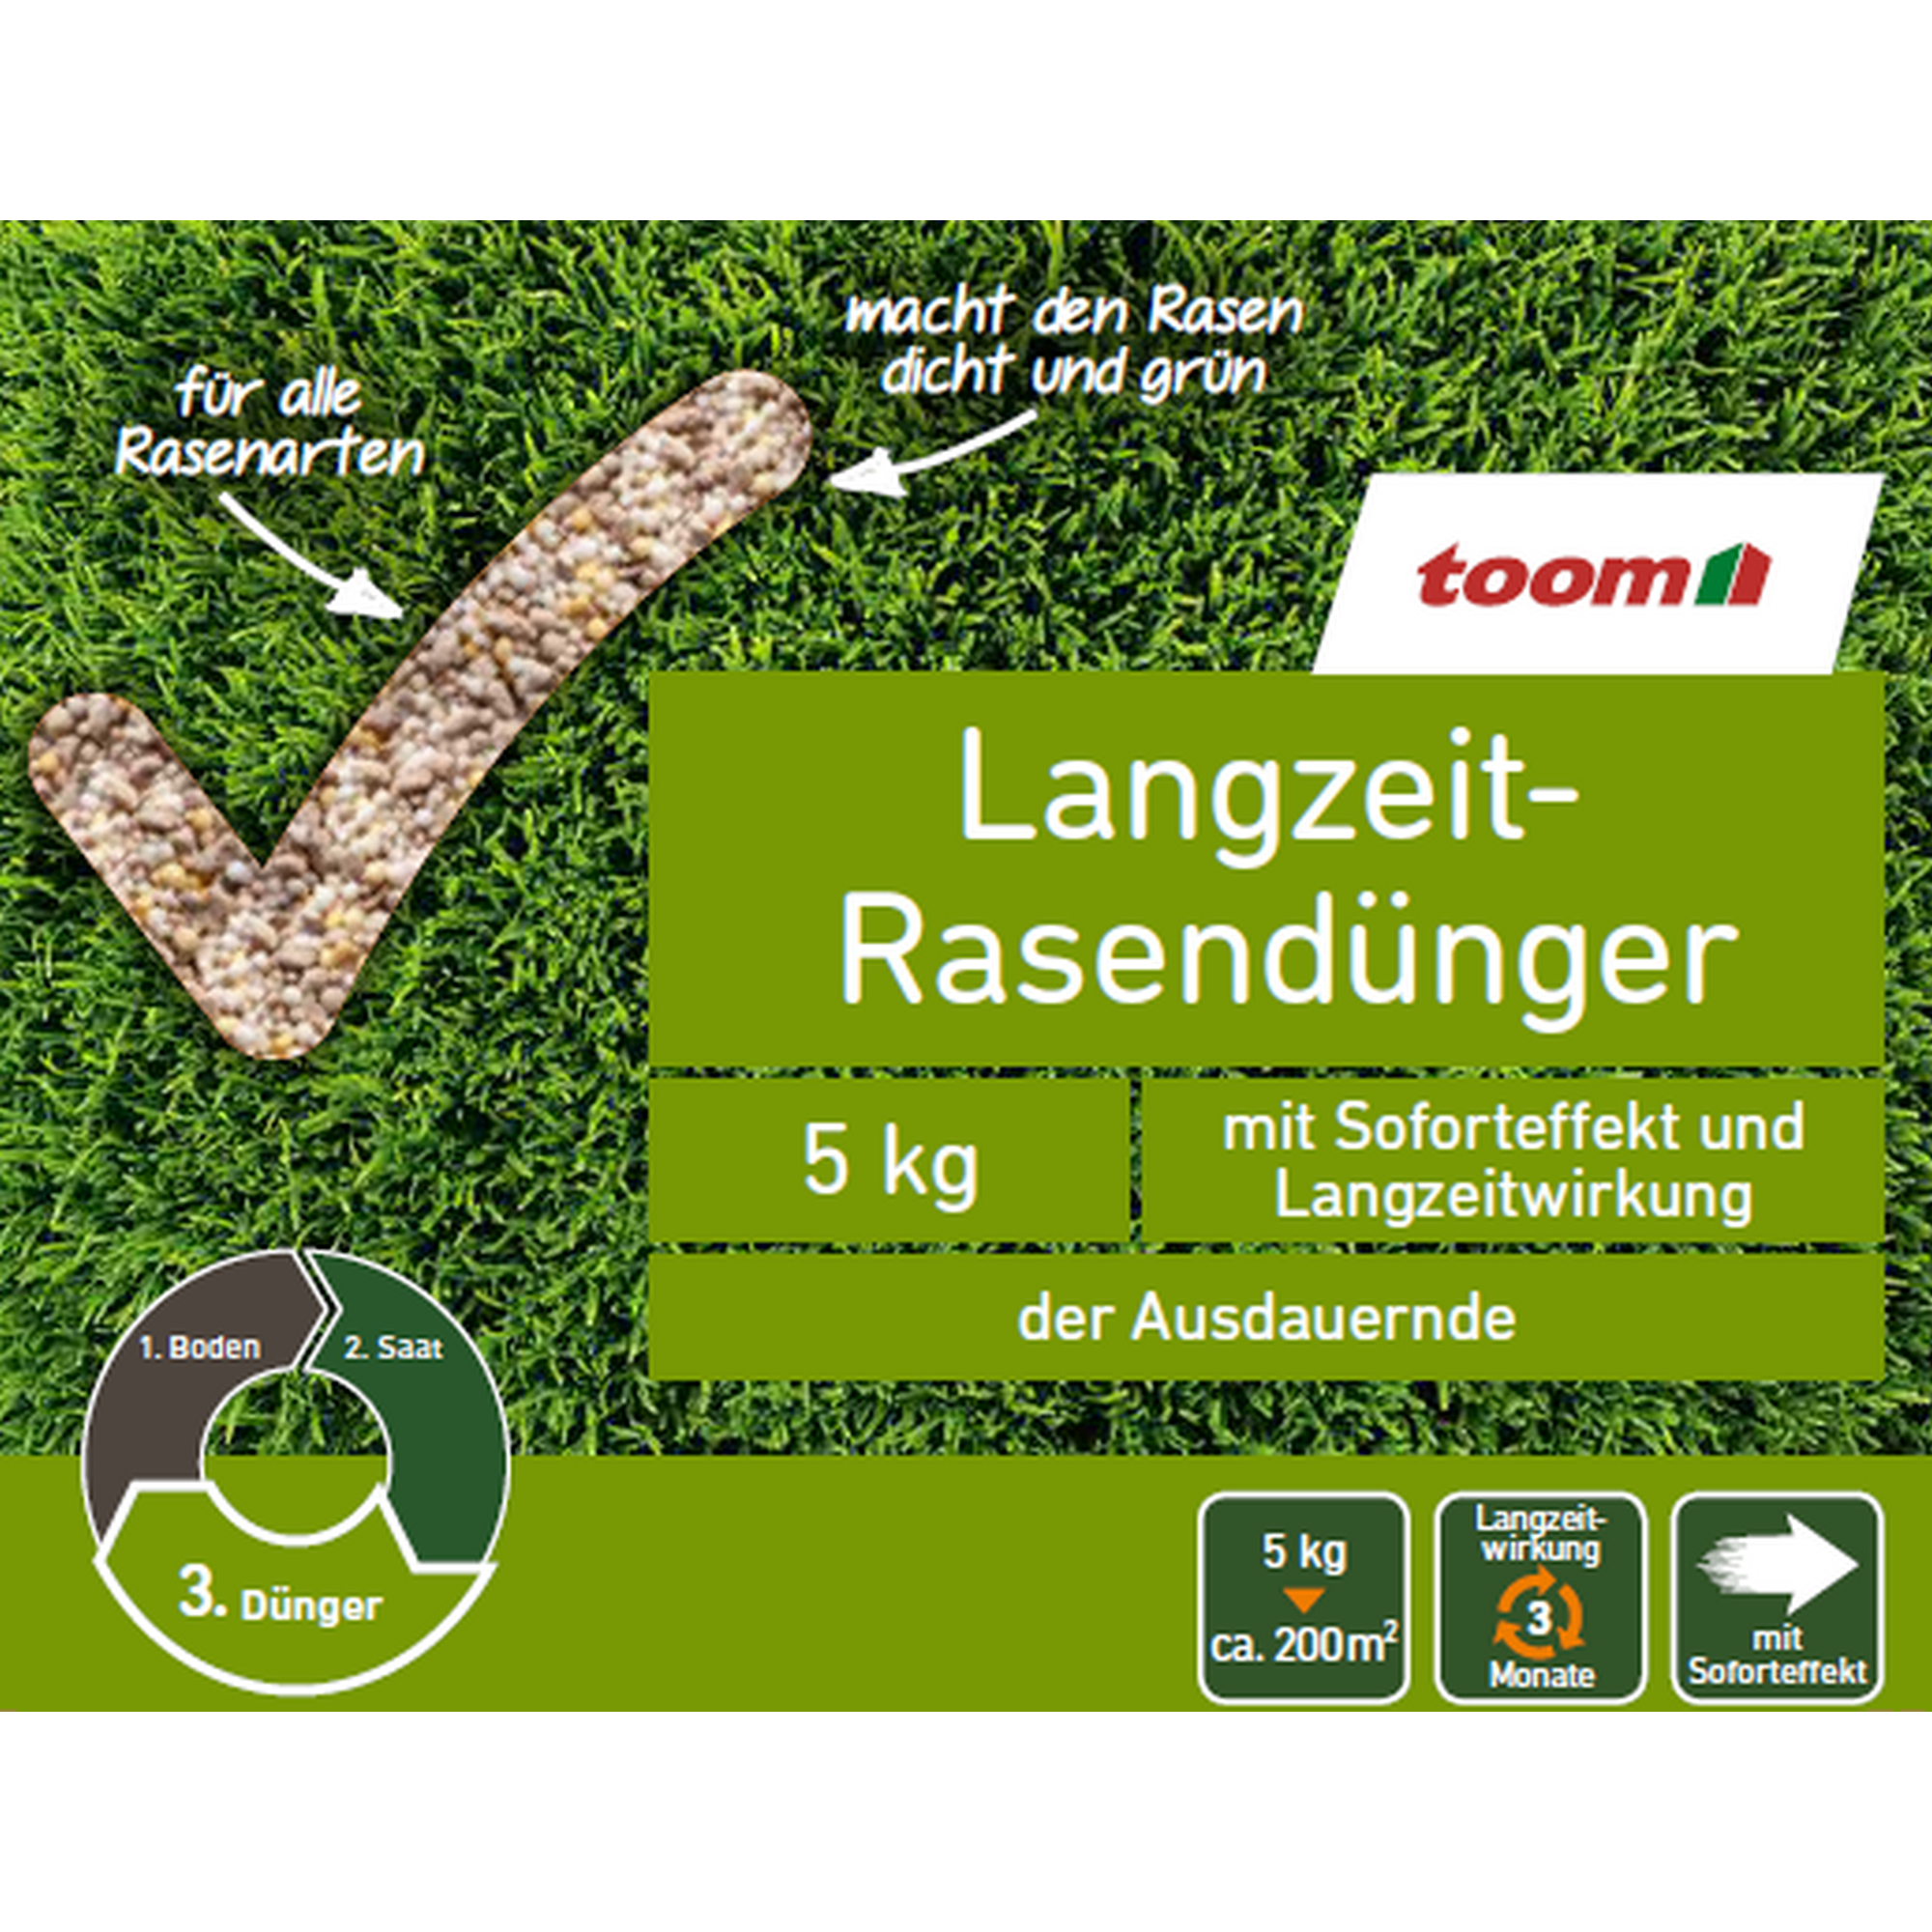 Langzeit-Rasendünger 5 kg + product picture